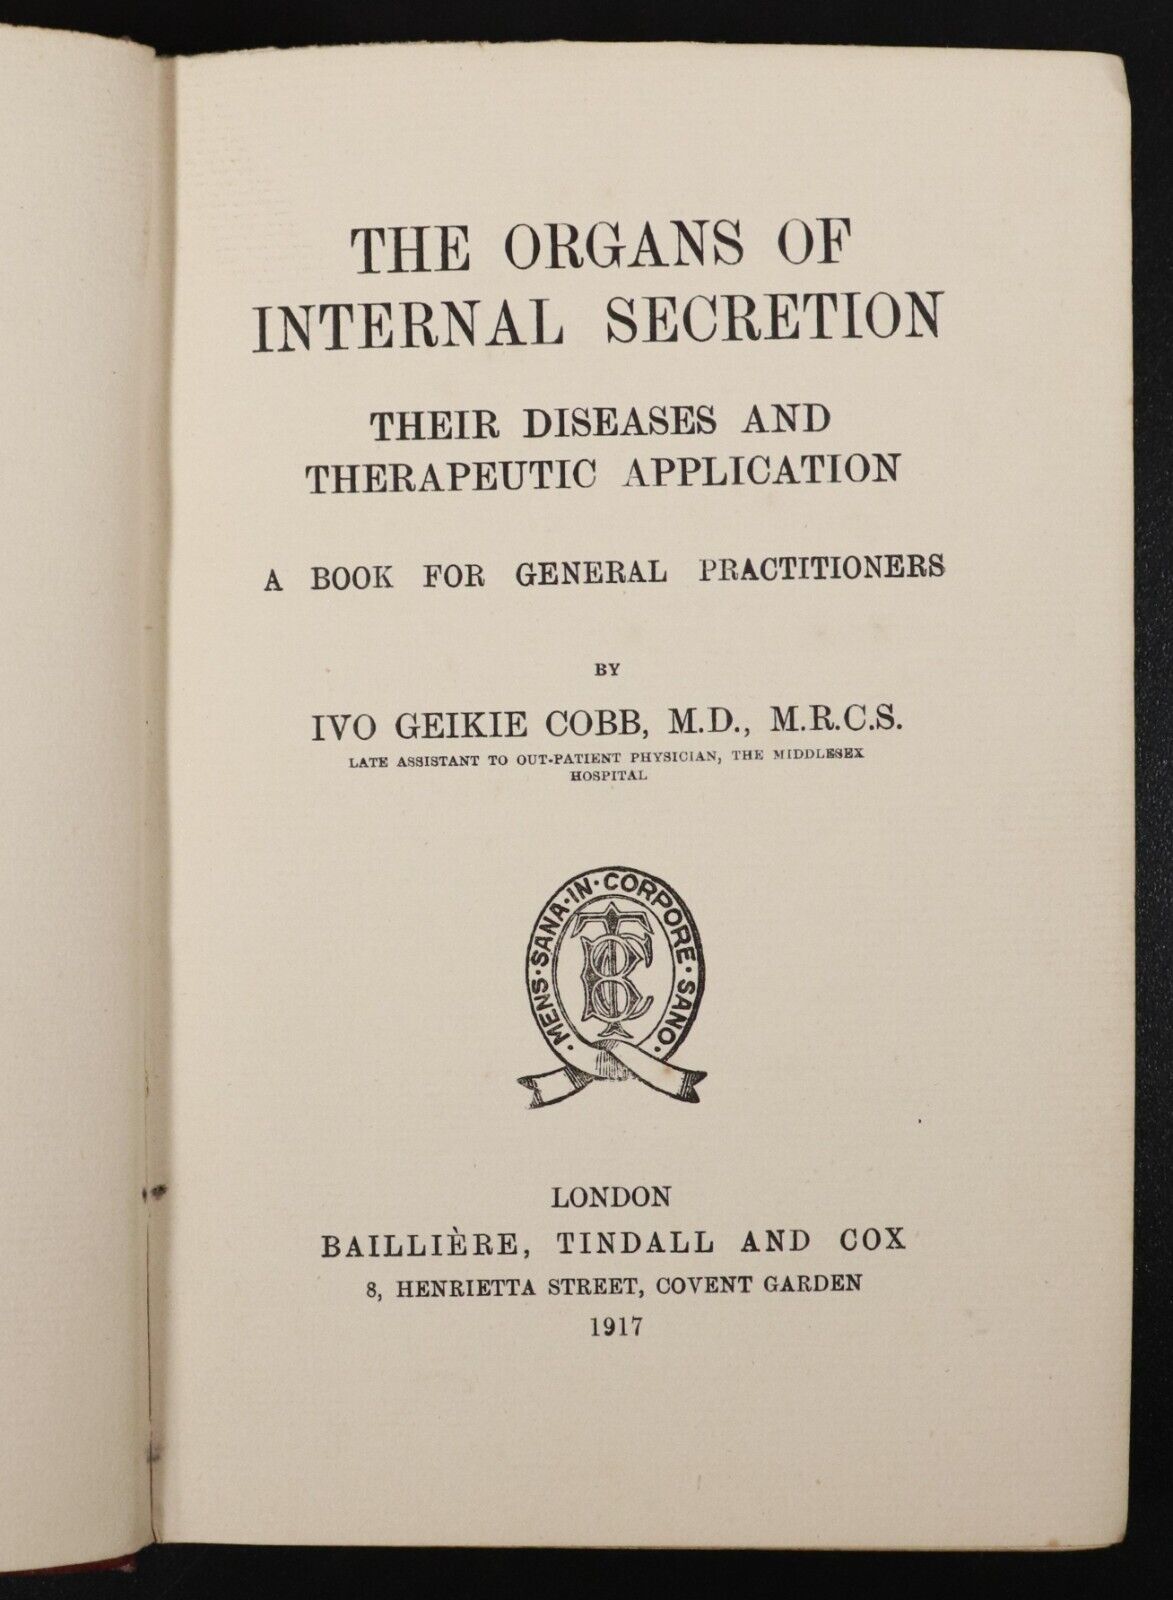 1917 The Organs Of Internal Secretion by Ivo Geikie Cobb Antique Medical Book - 0